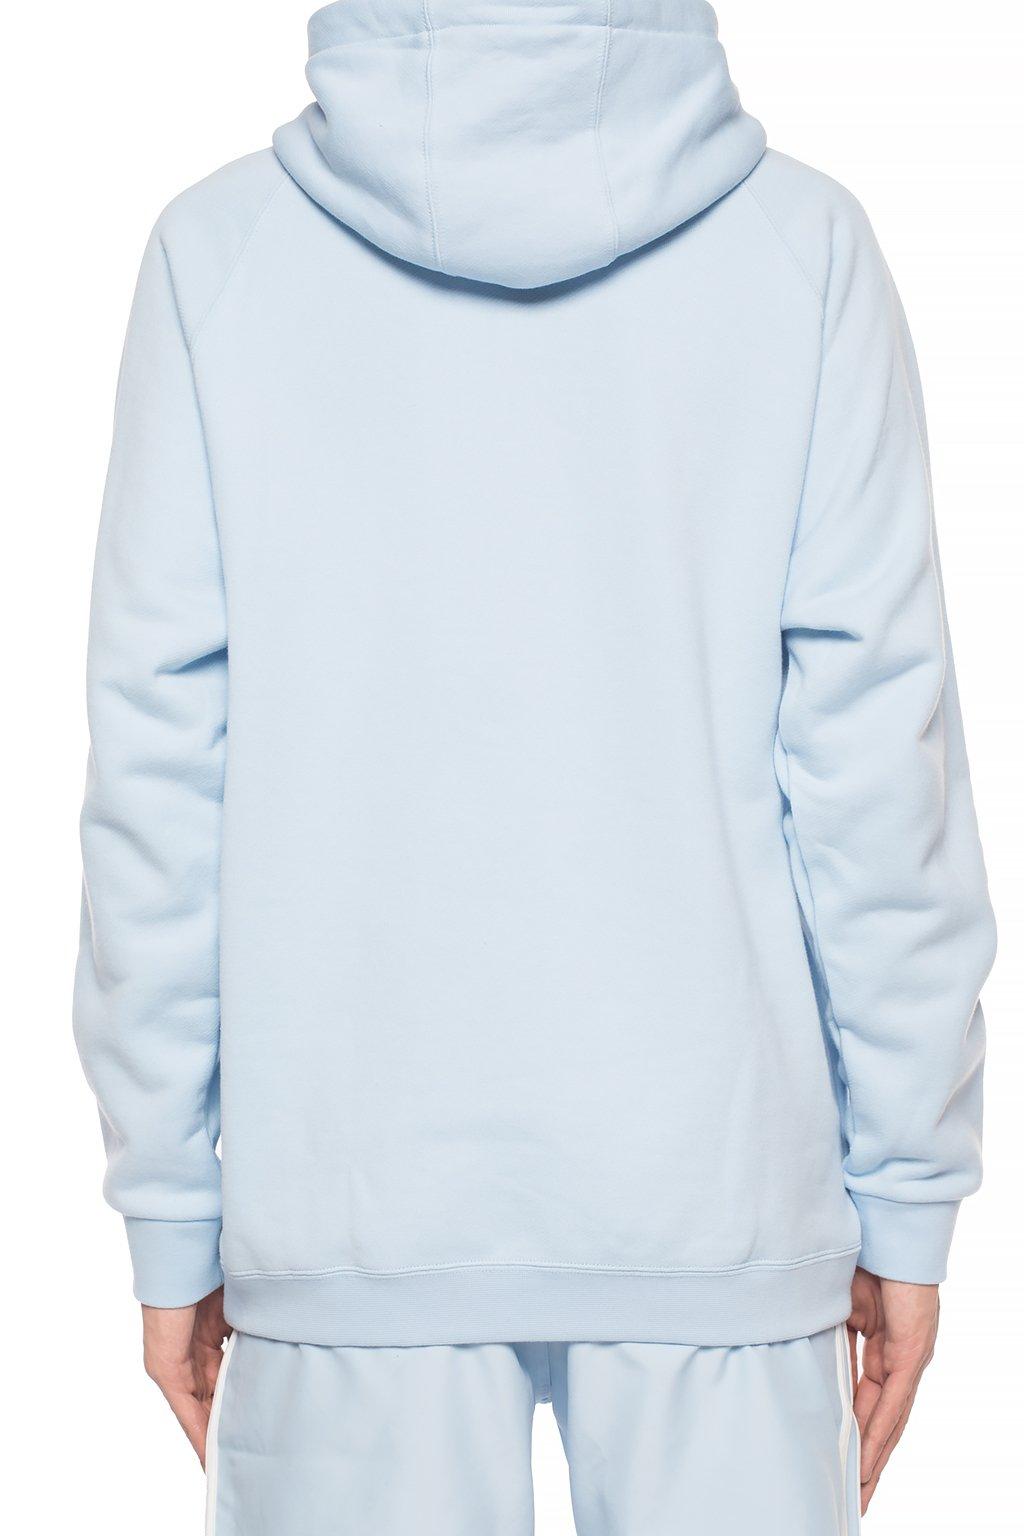 adidas Originals Cotton Logo Hoodie Light Blue for Men - Lyst